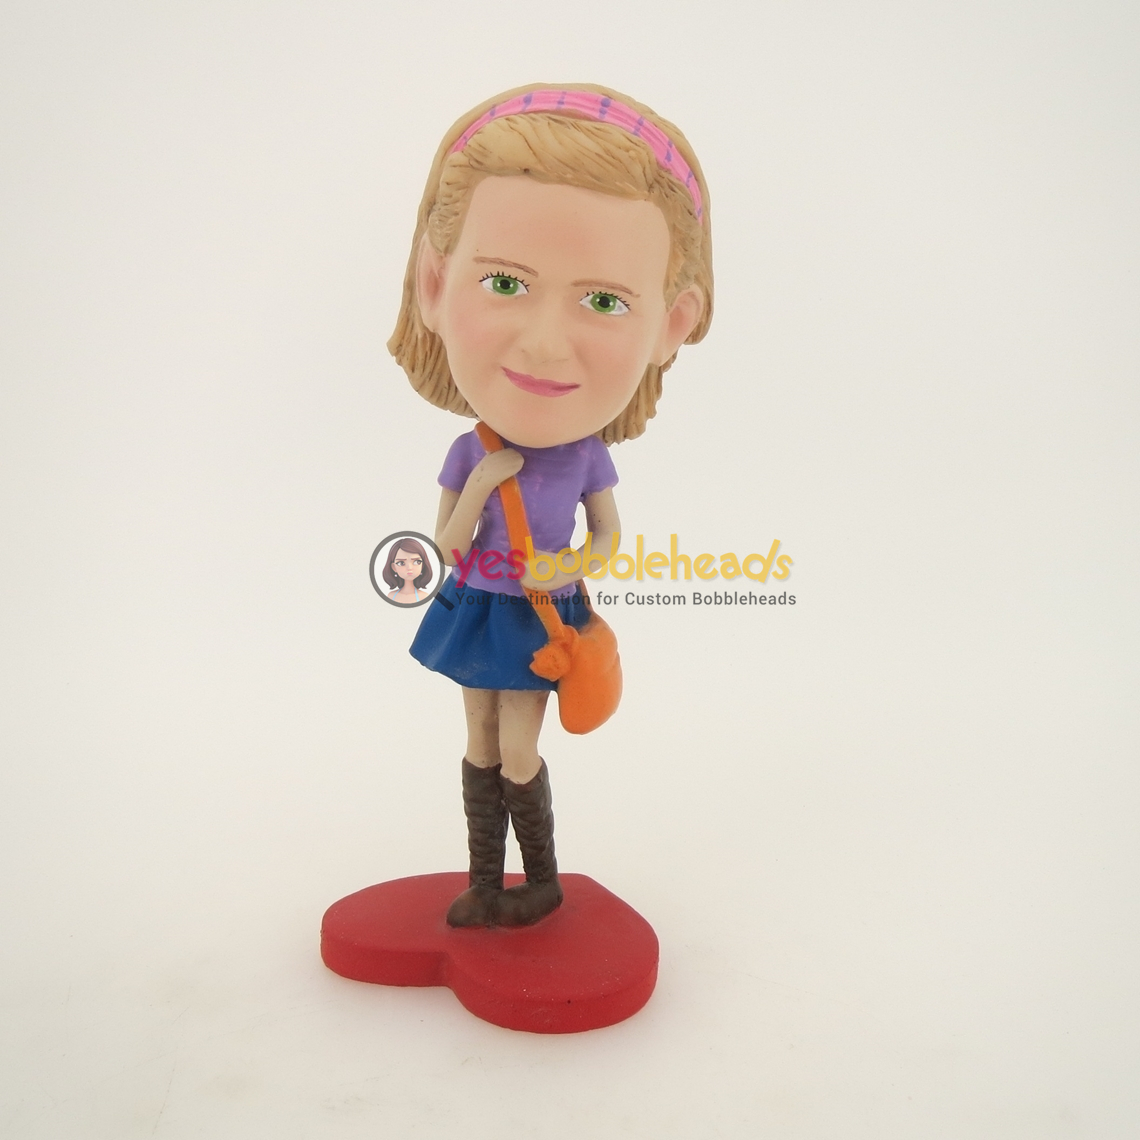 Picture of Custom Bobblehead Doll: Pretty Schoolgirl